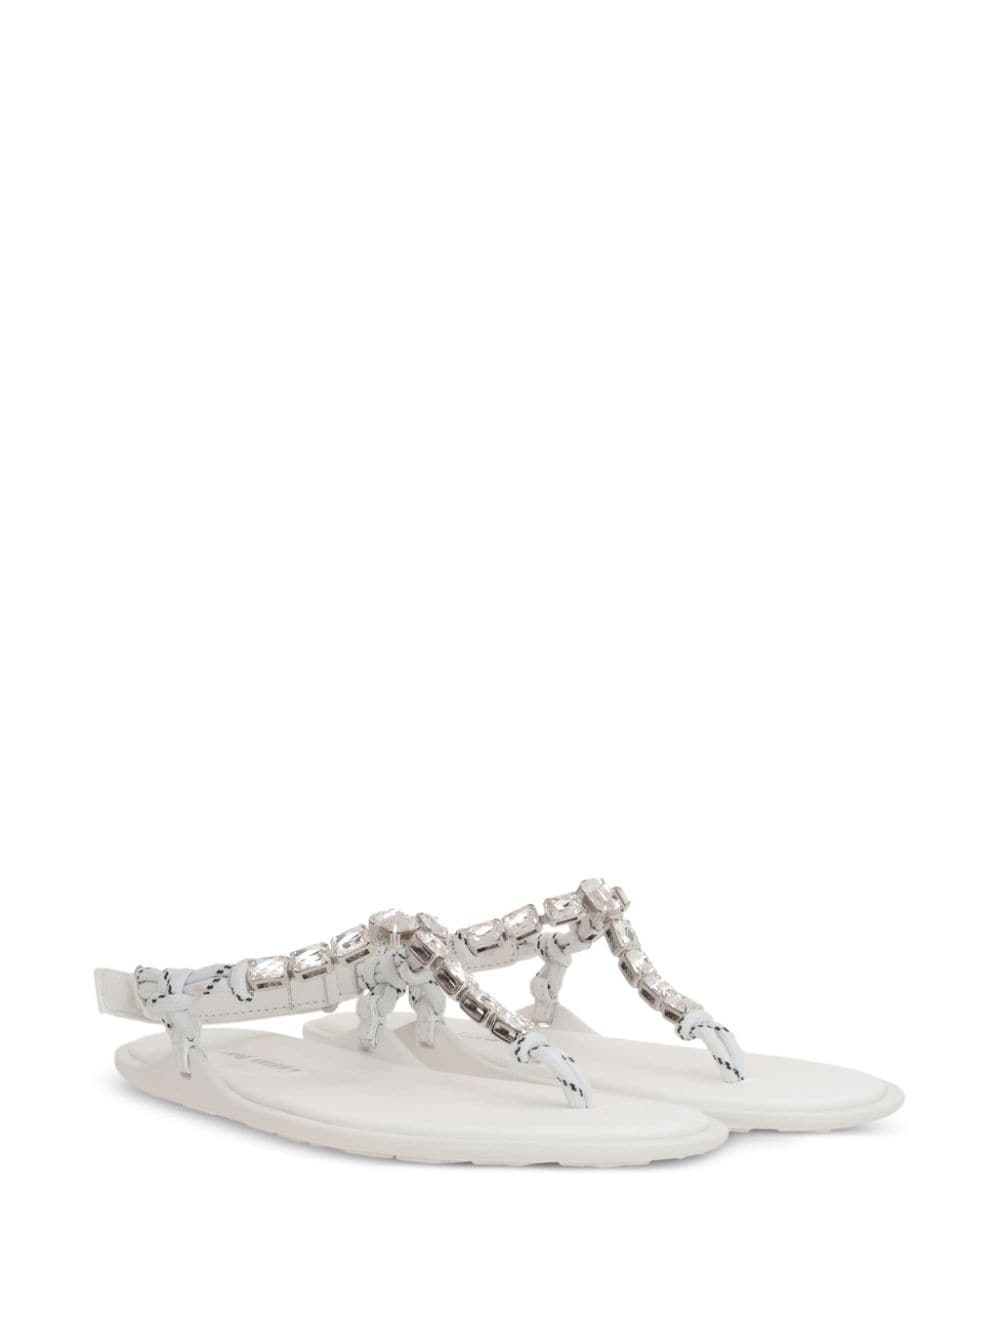 Miu Miu crystal-embellished thong sandals - Beige